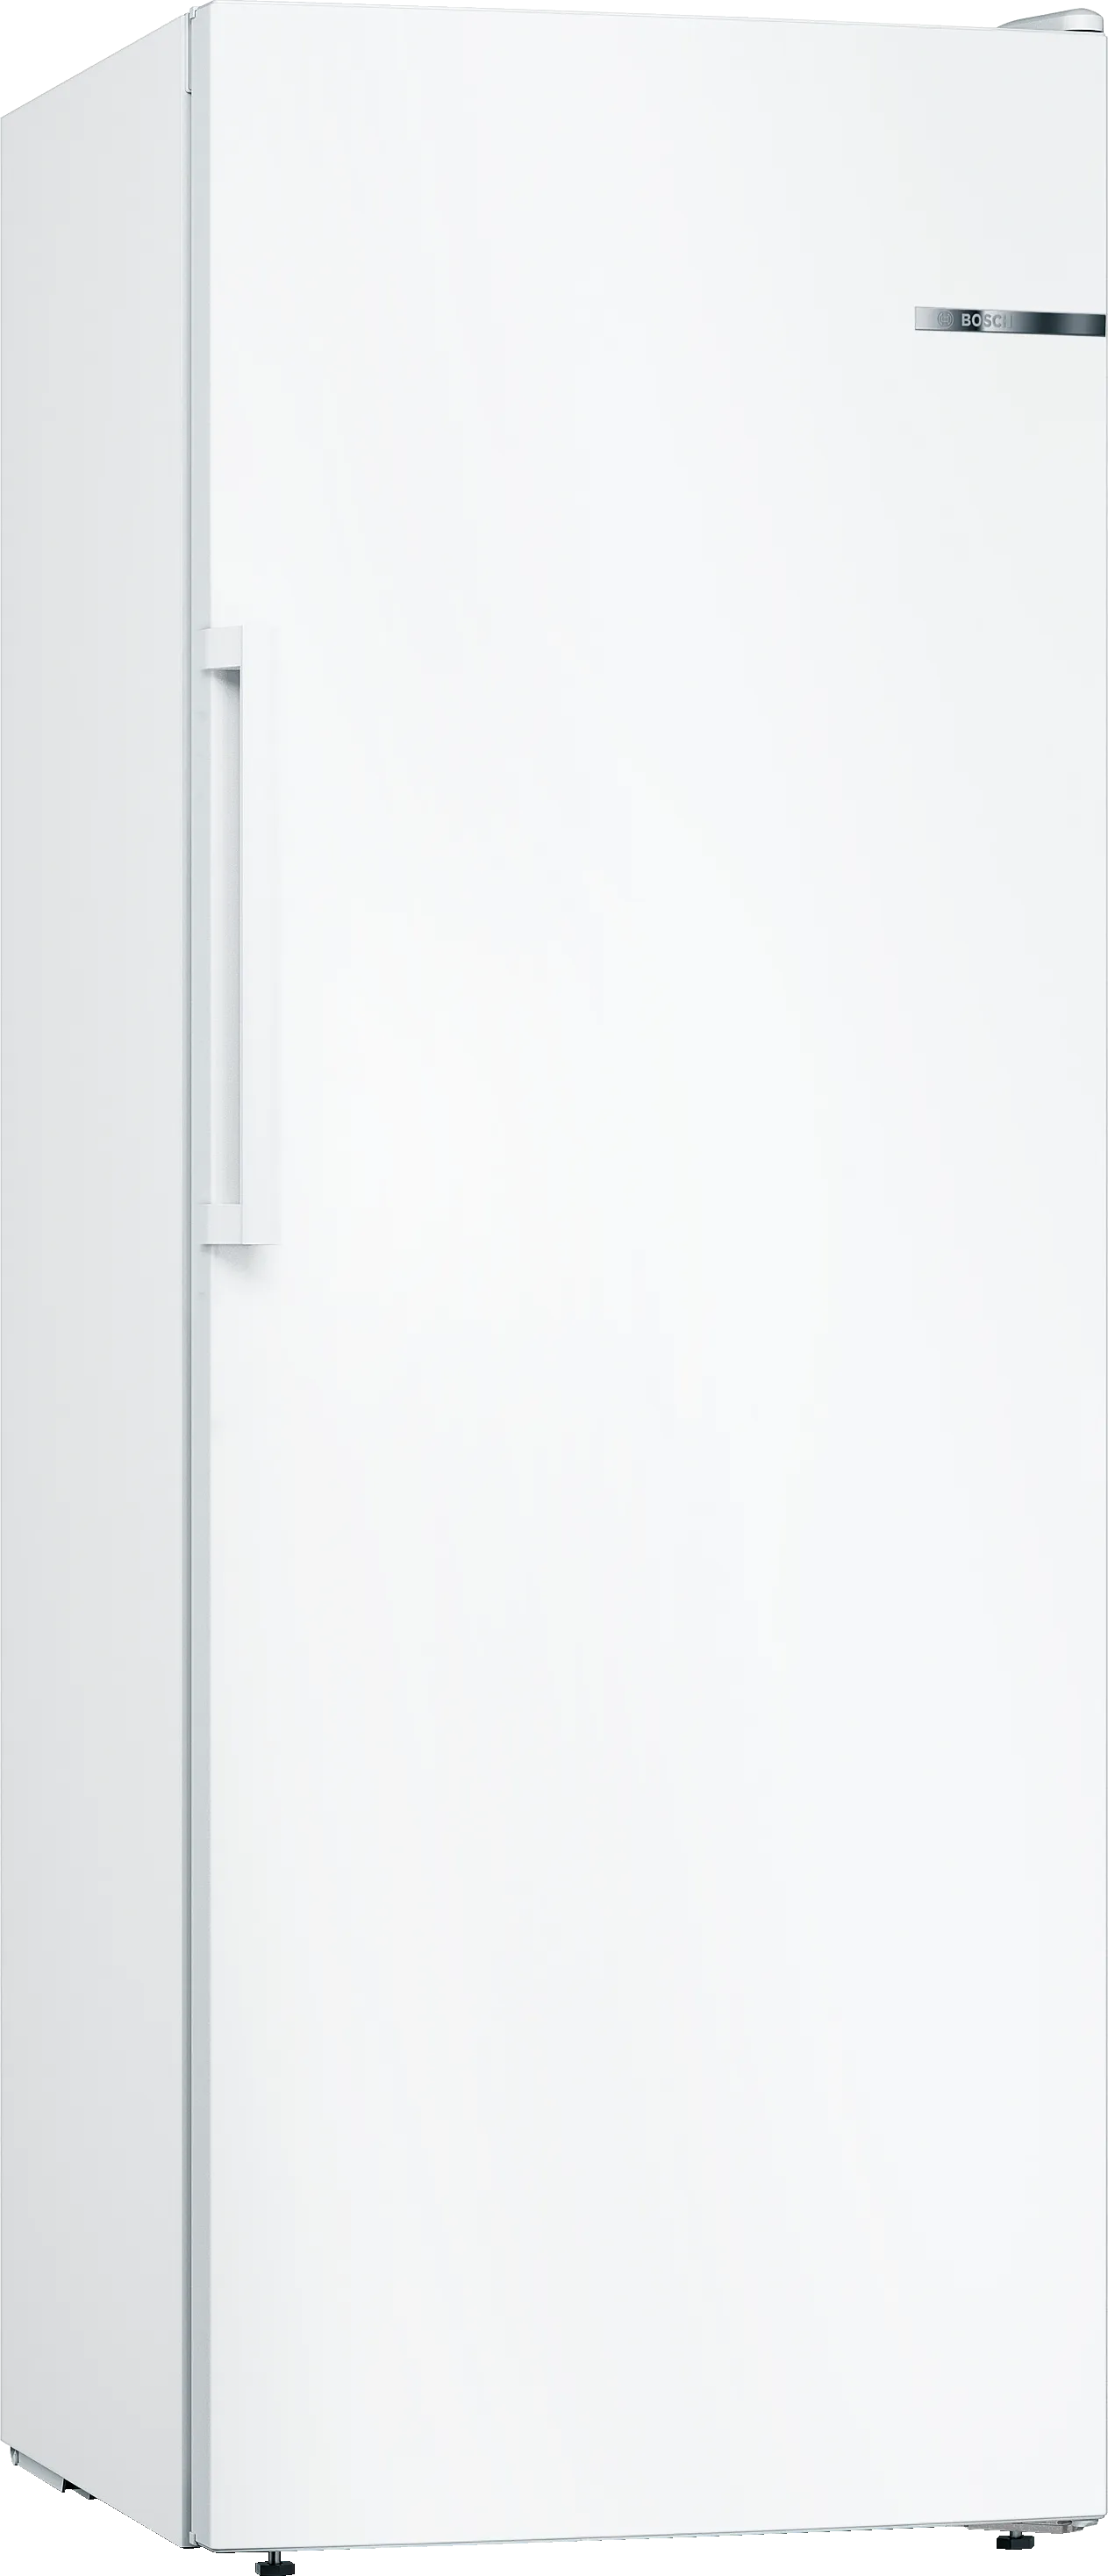 Series 4 free-standing freezer 161 x 60 cm White 